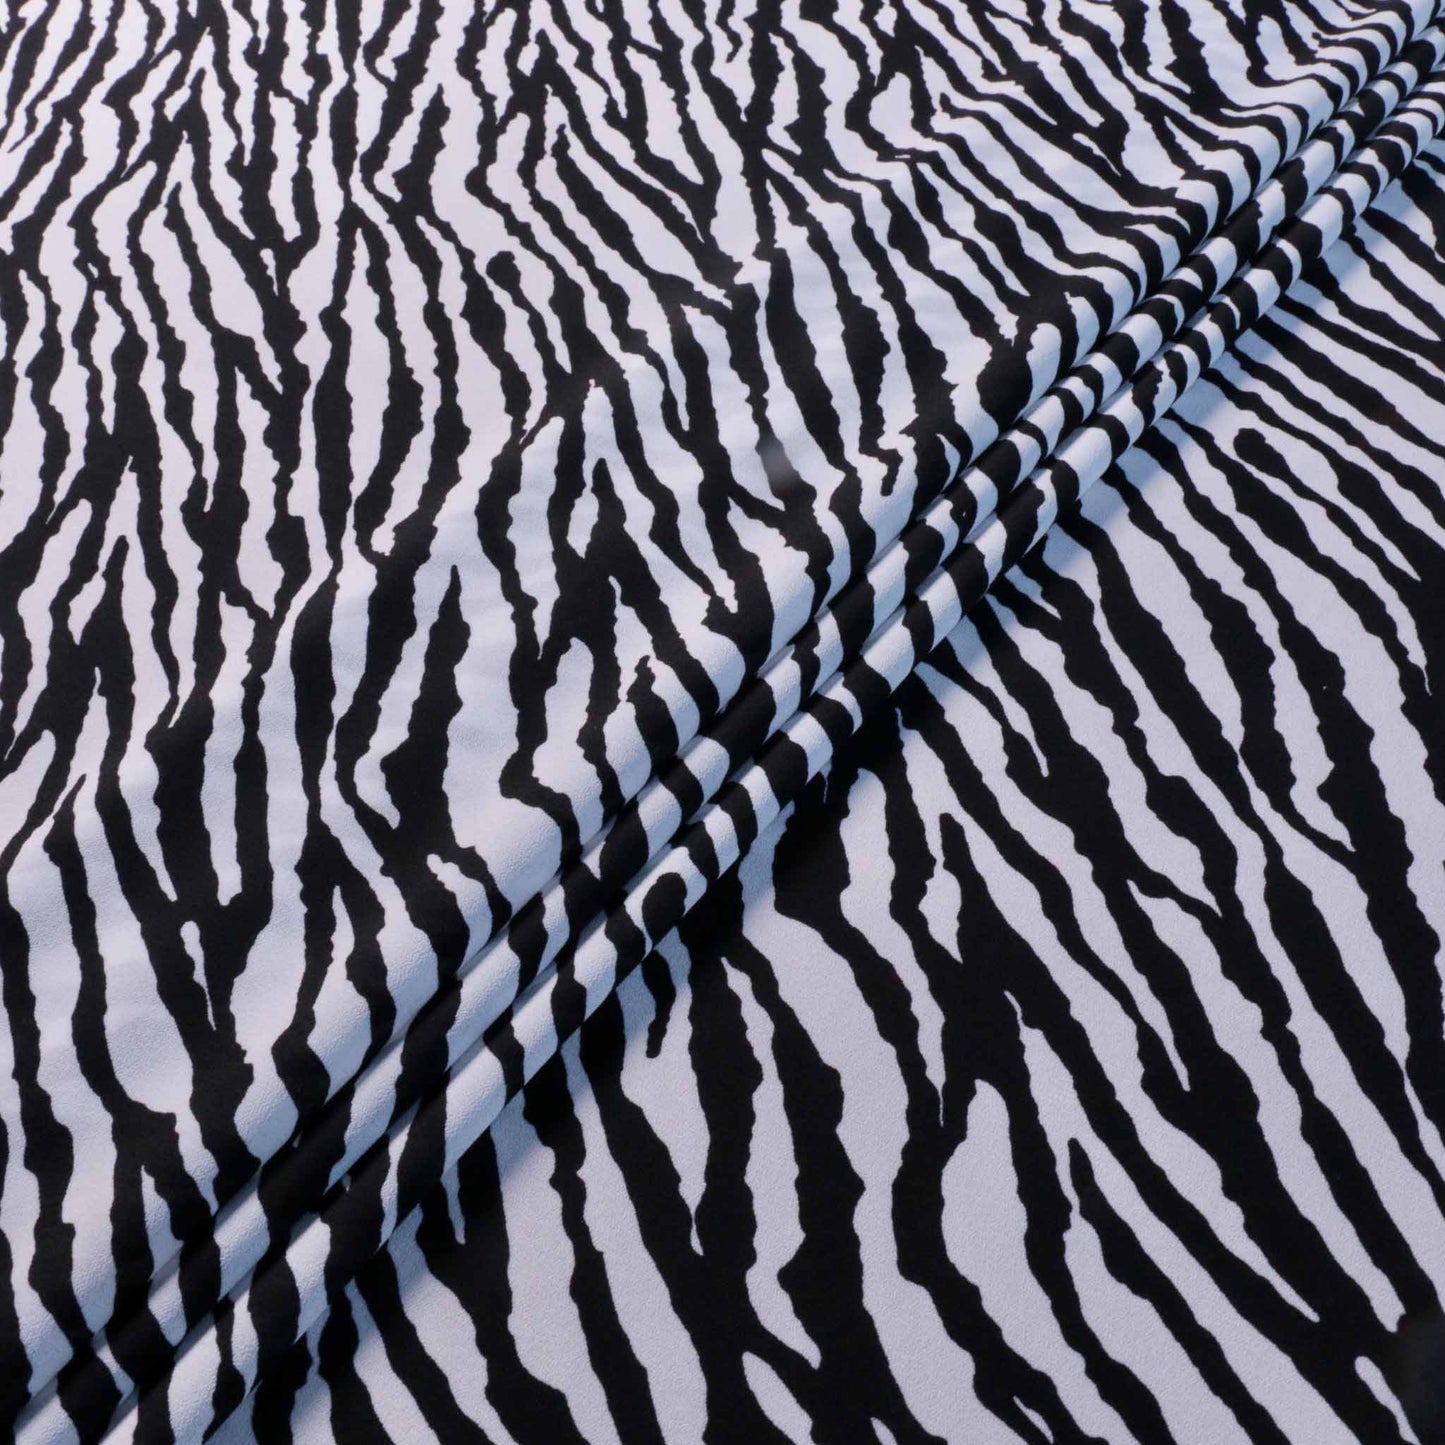 animal print zebra skin white and black georgette fabric for dressmaking